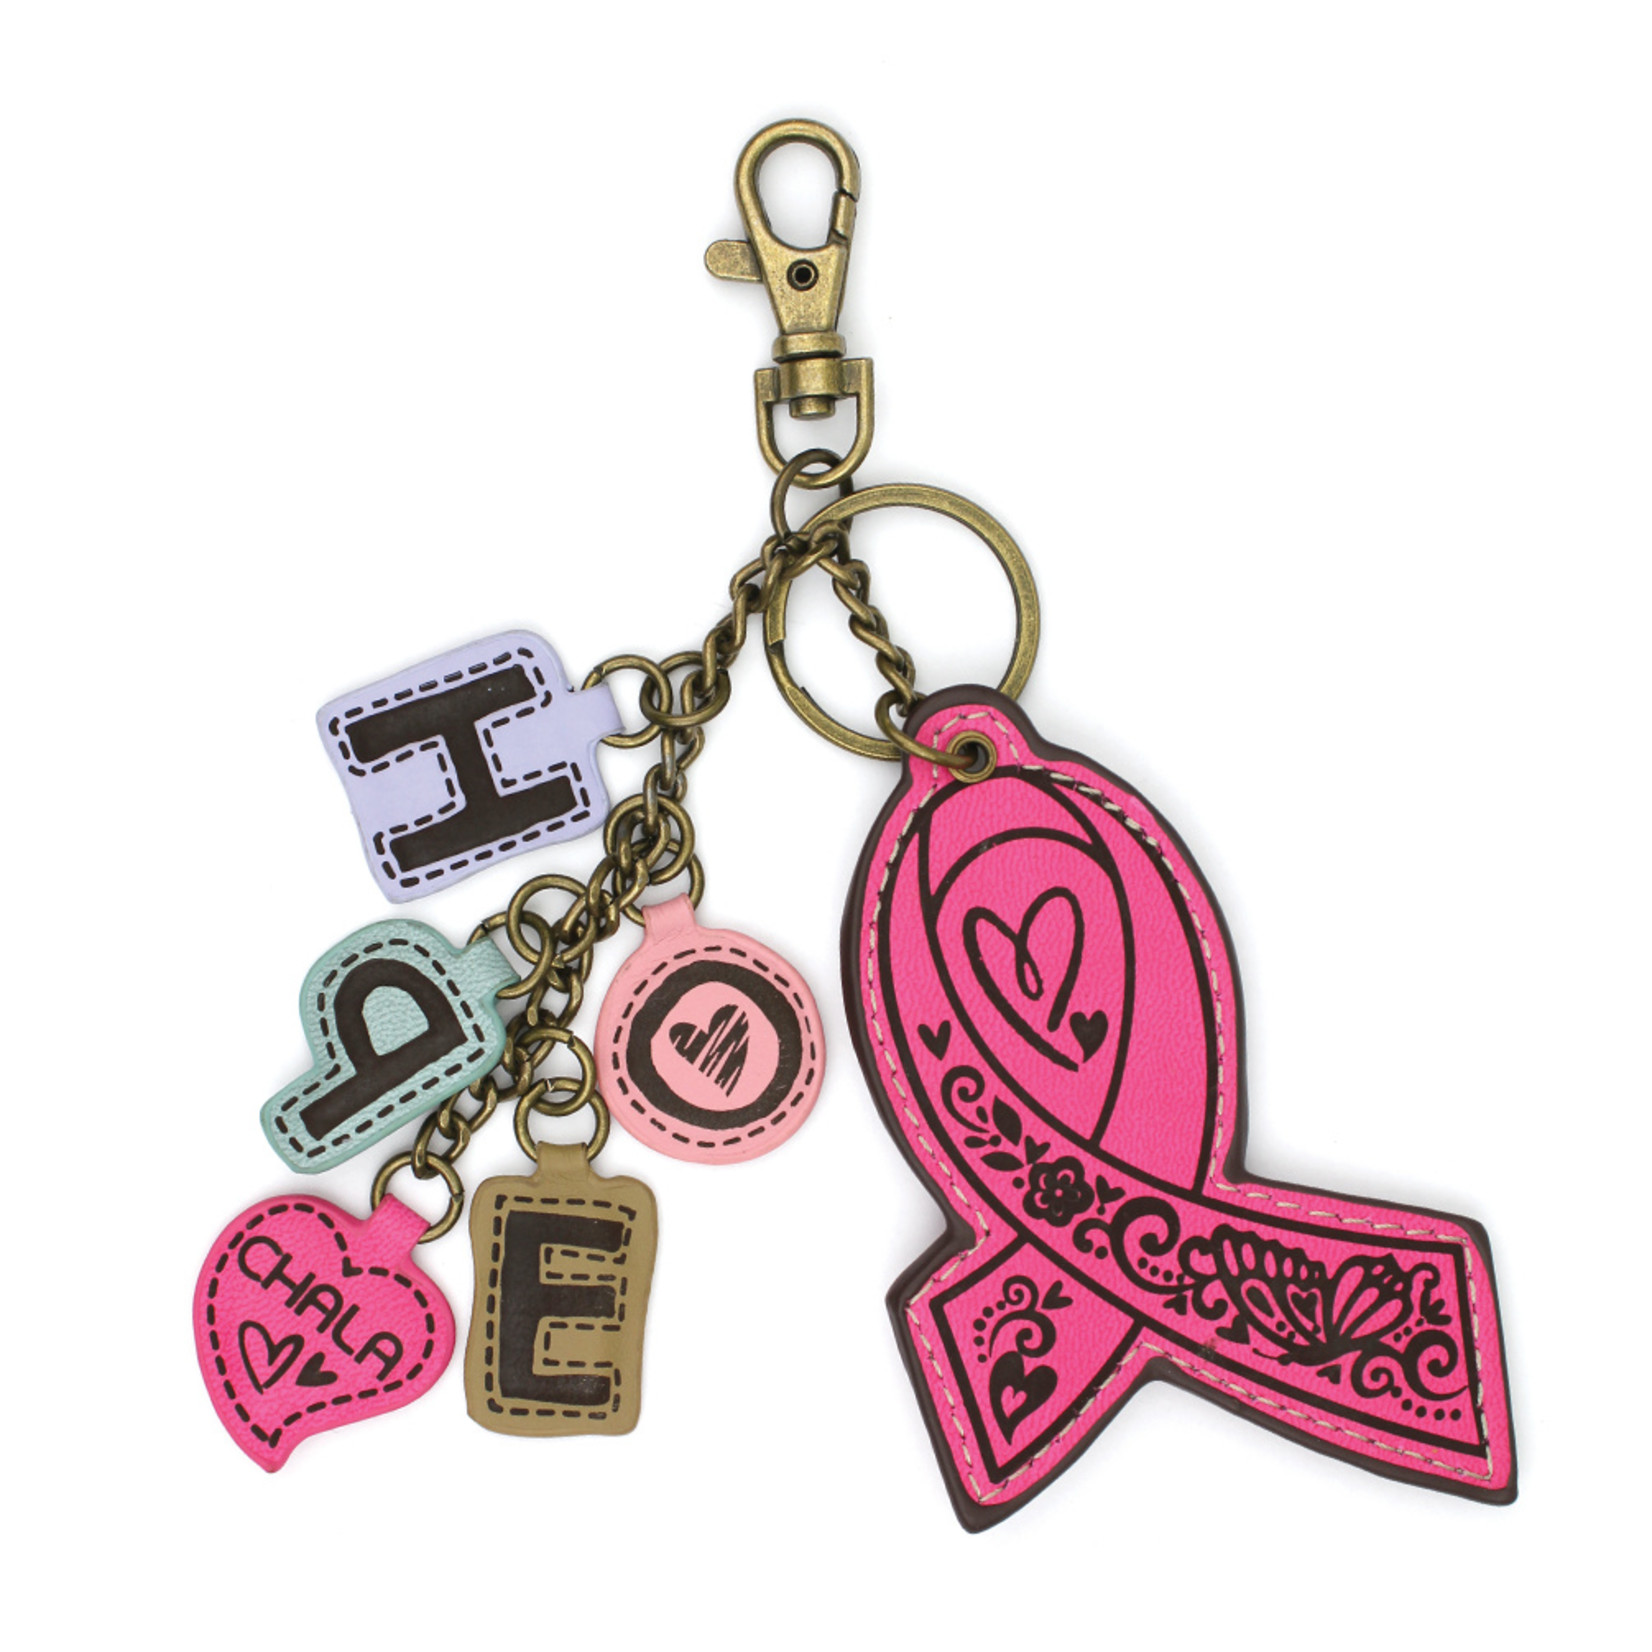 Chala Charming Charms Keychain - Ribbon - Pink